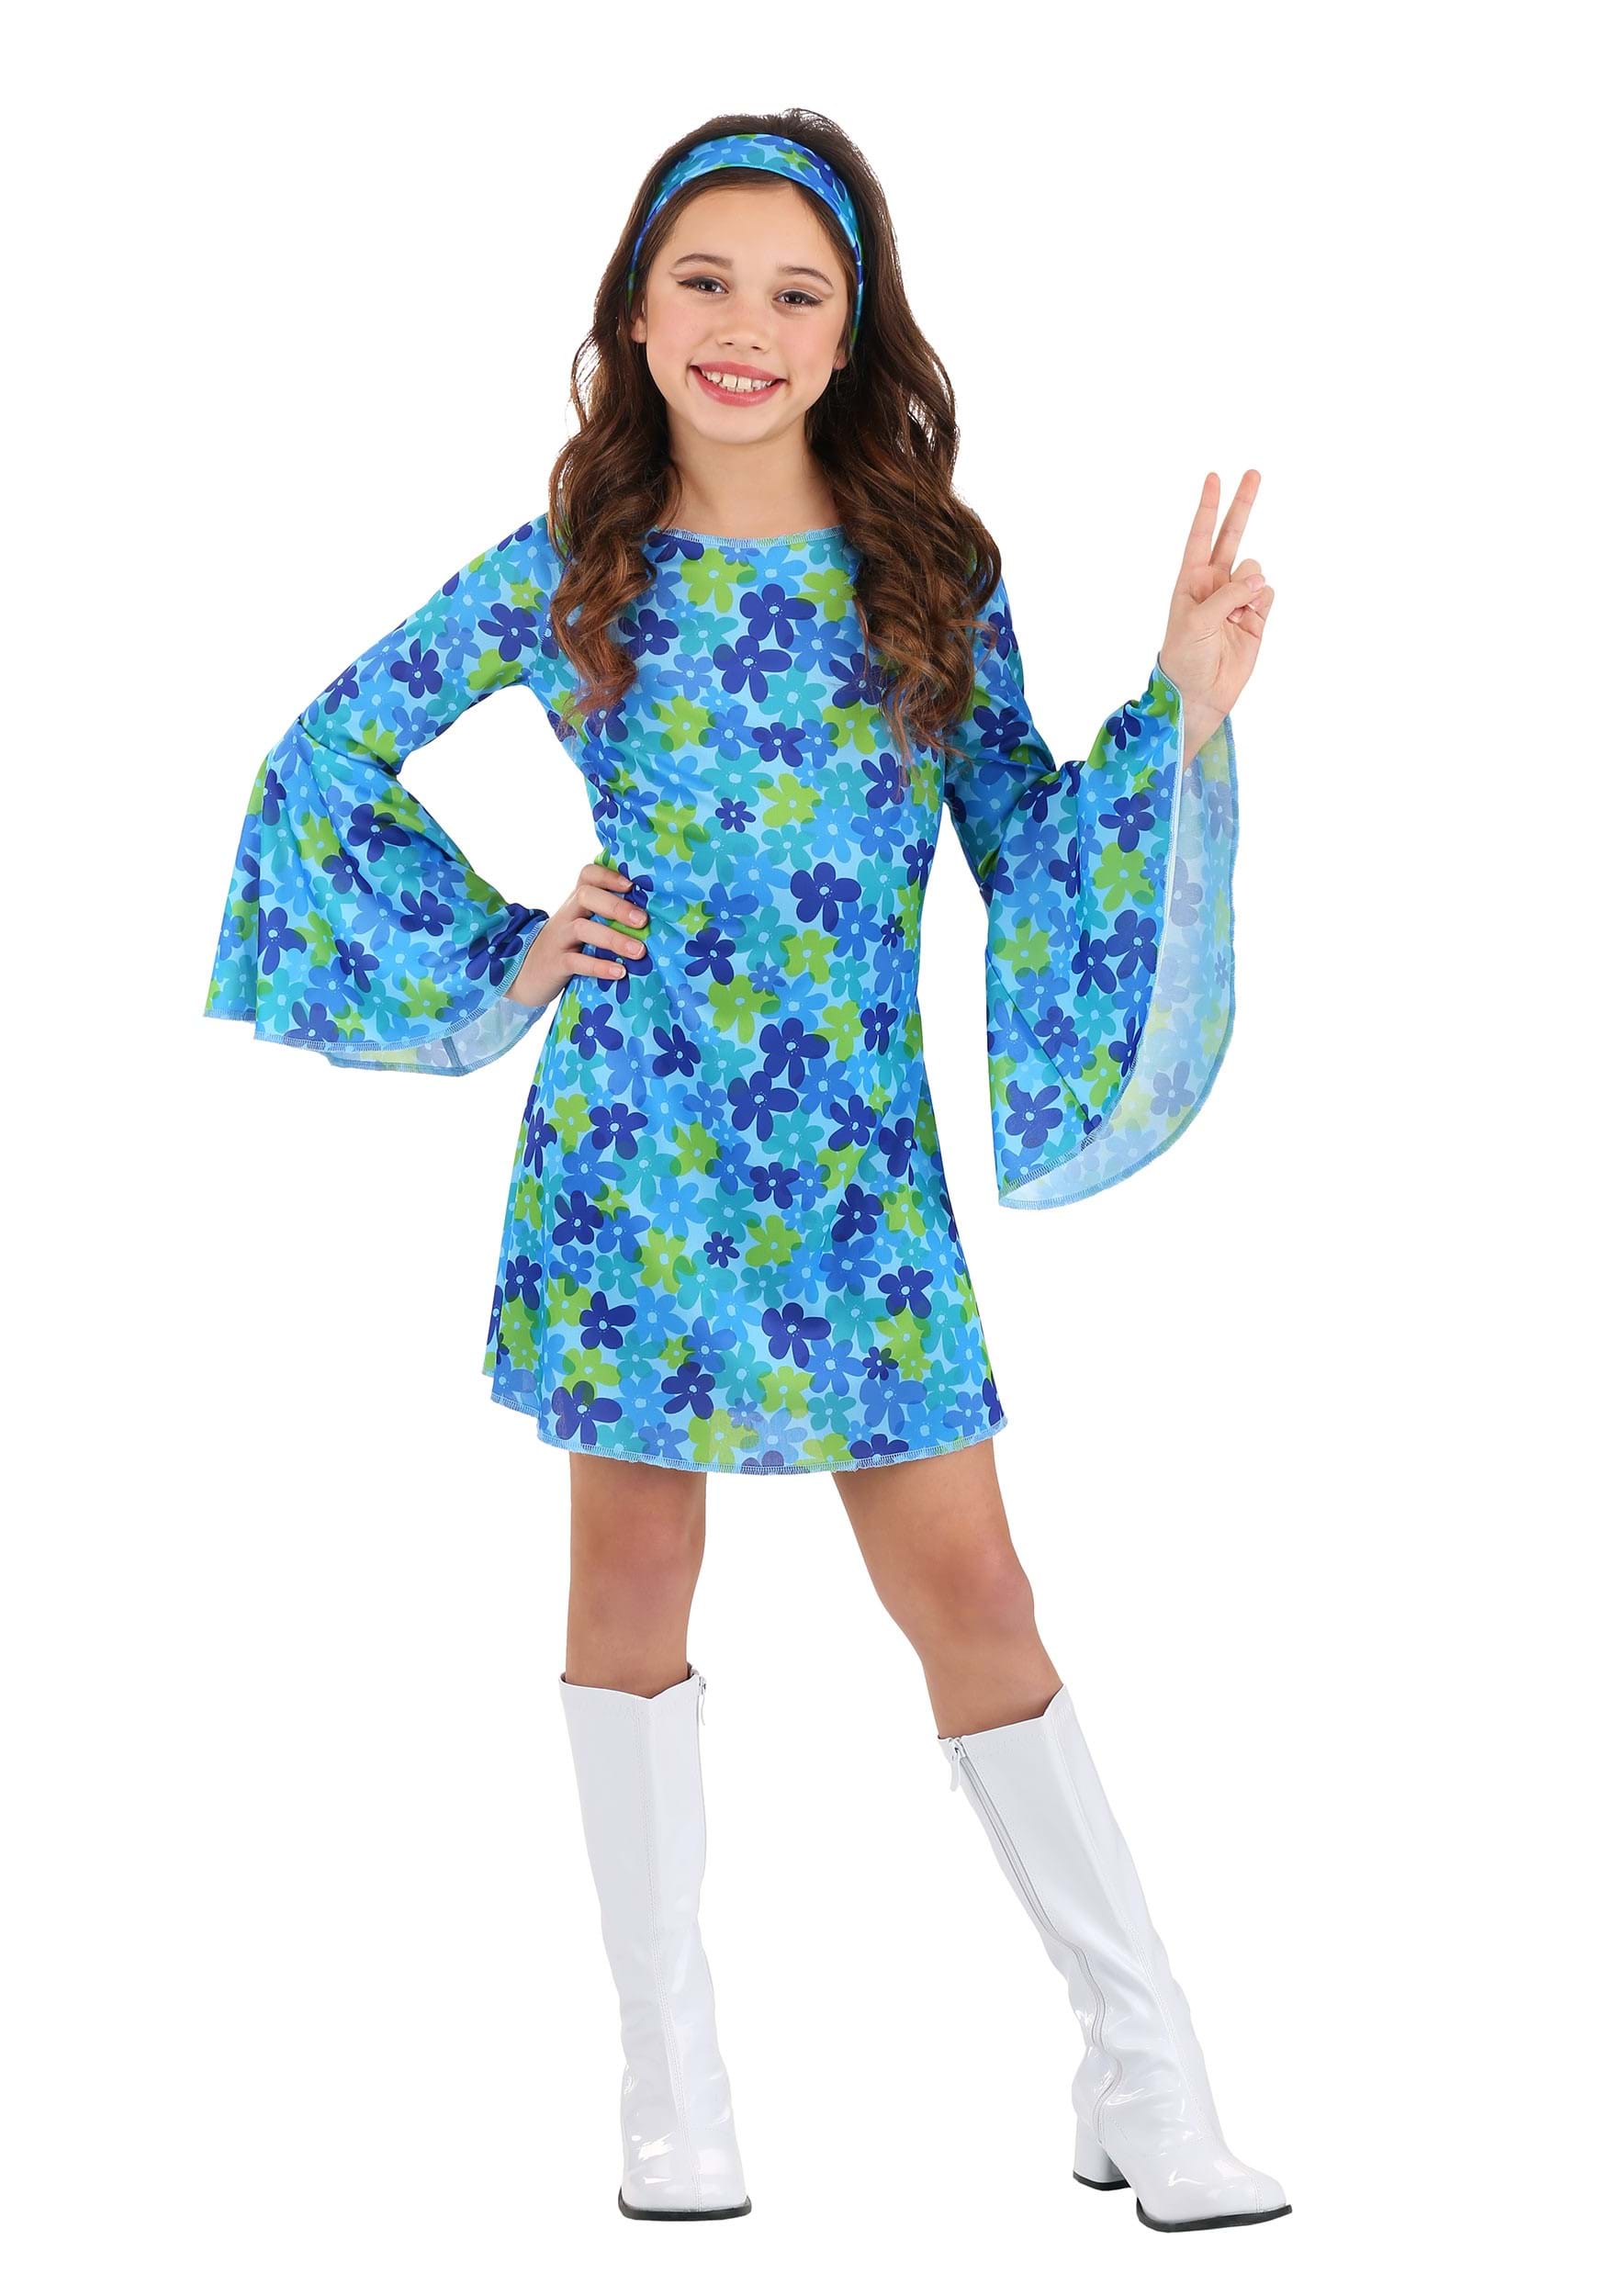 Photos - Fancy Dress Winsun Dress FUN Costumes Girl's Wild Flower 70s Disco Dress Costume Blue/Green FUN 